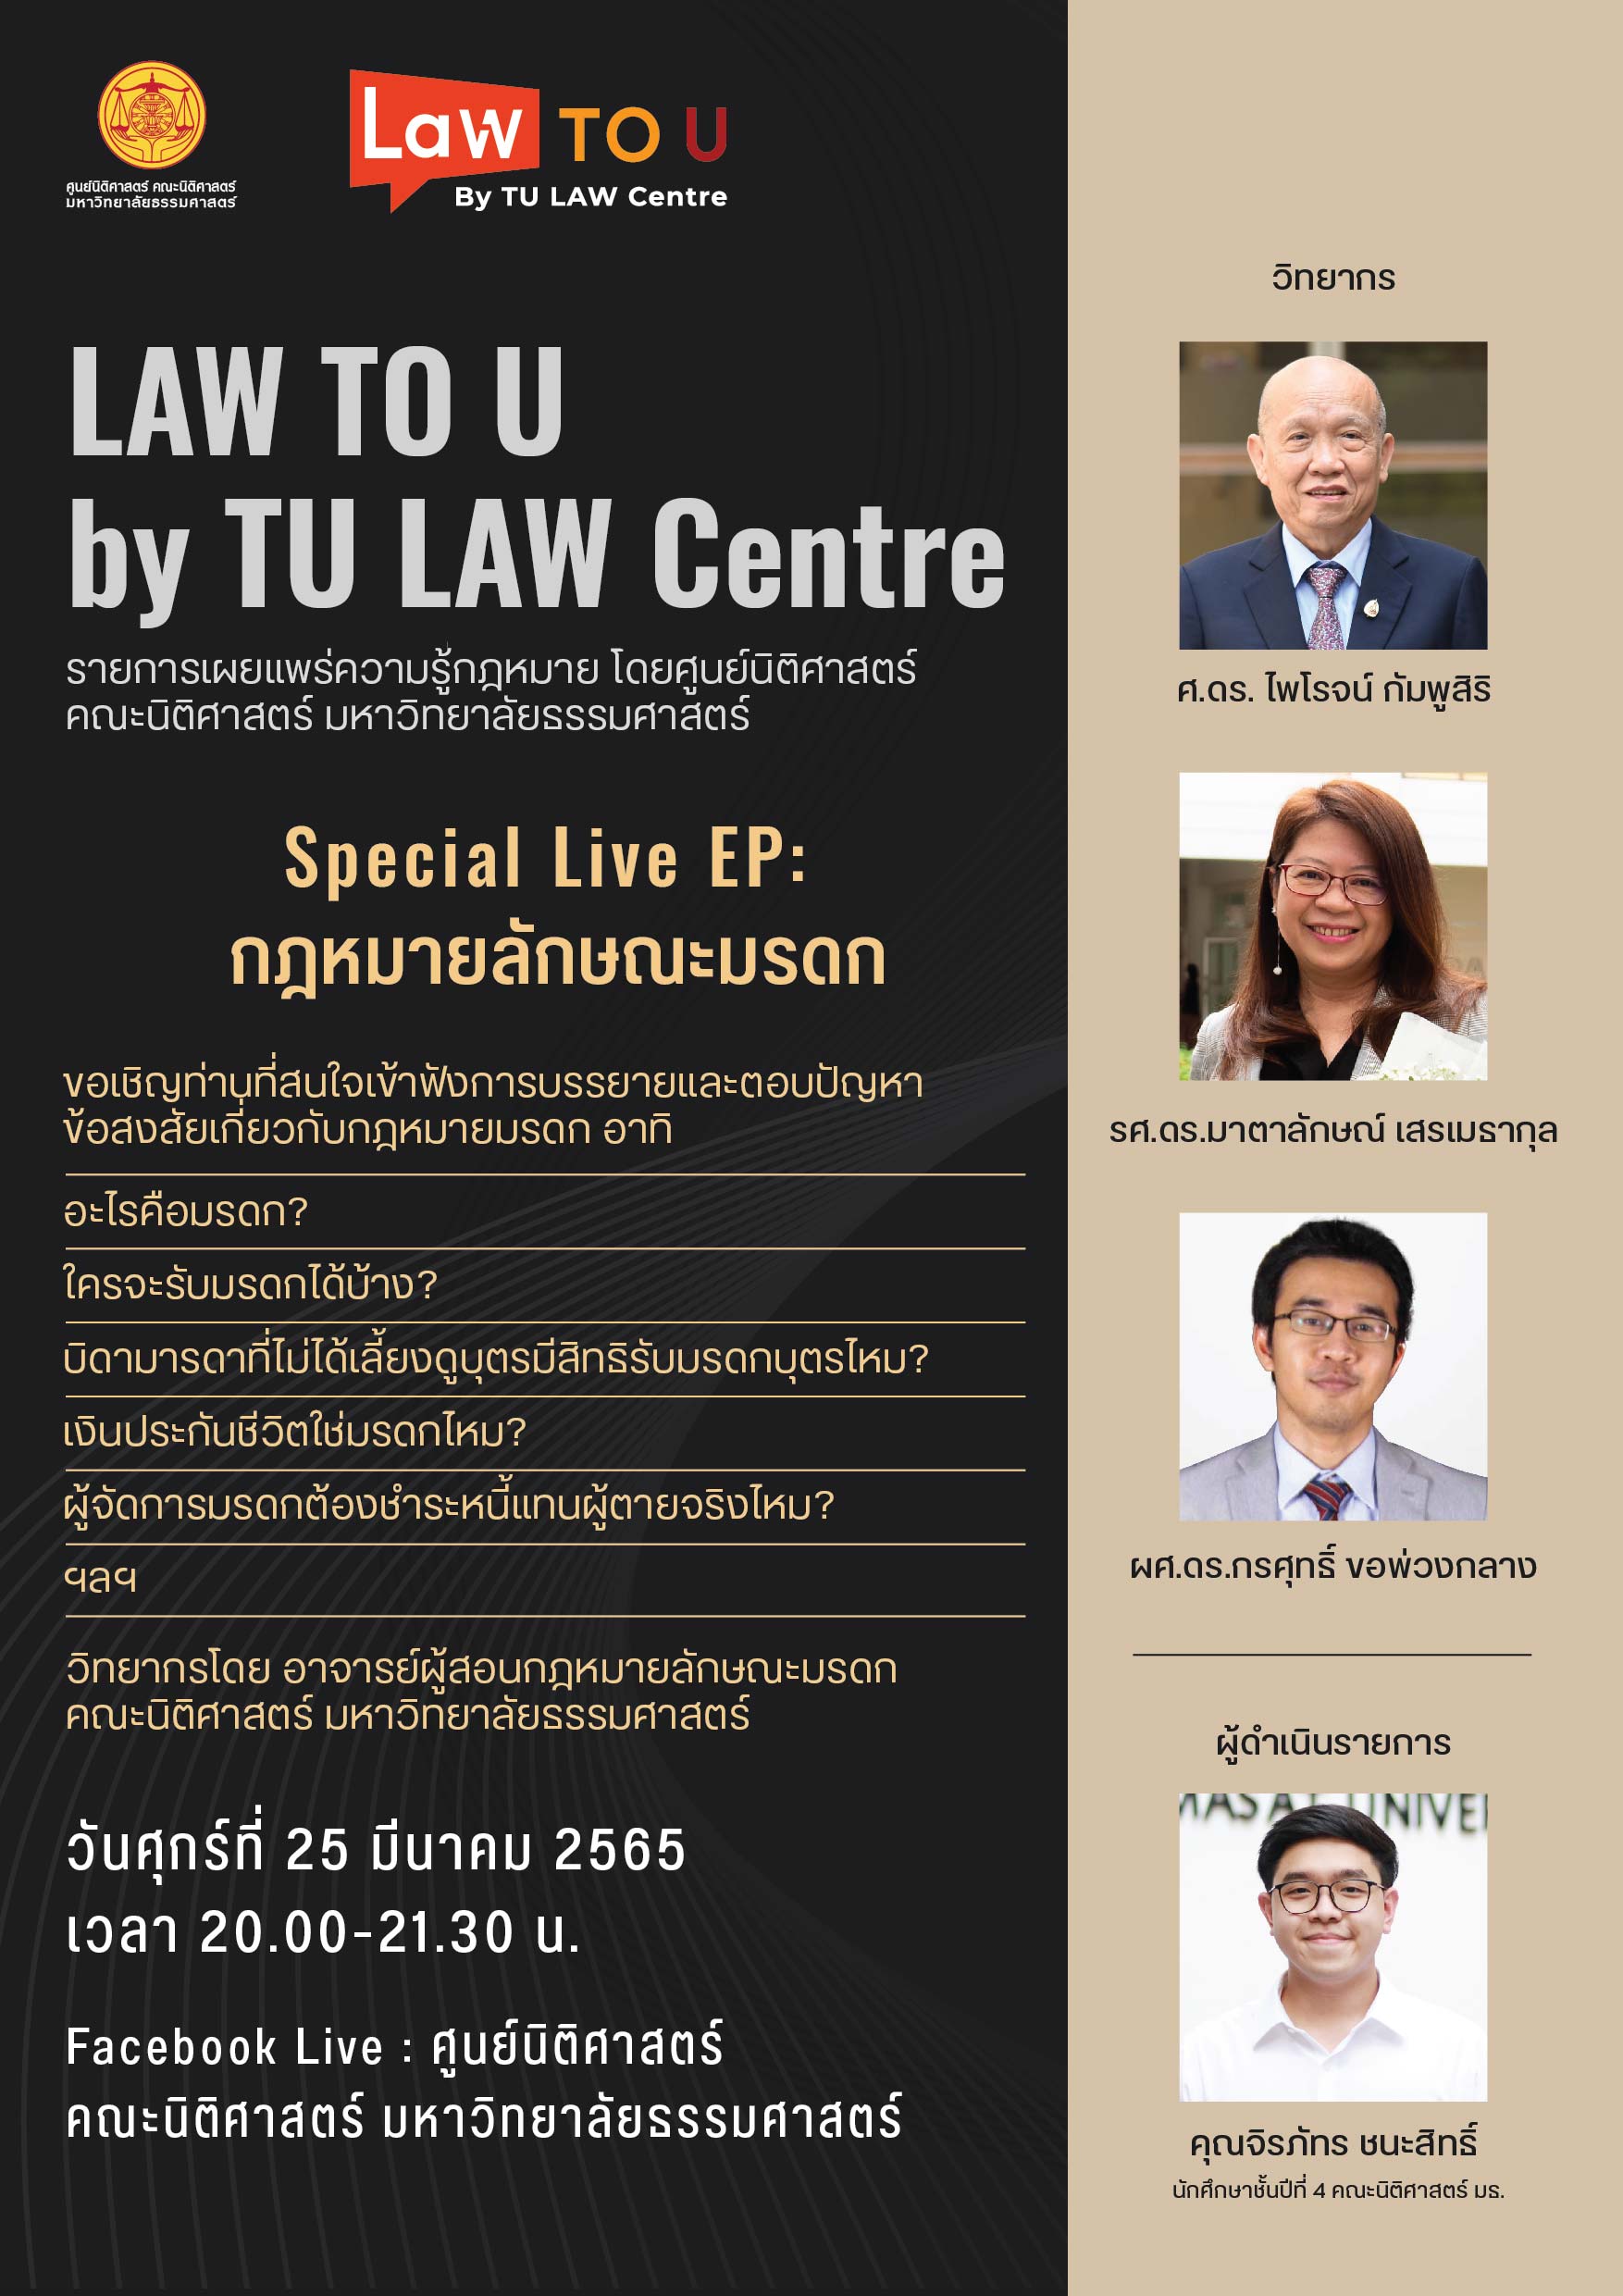 Law To U by TU Law Centre Special Live EP: กฎหมายลักษณะมรดก